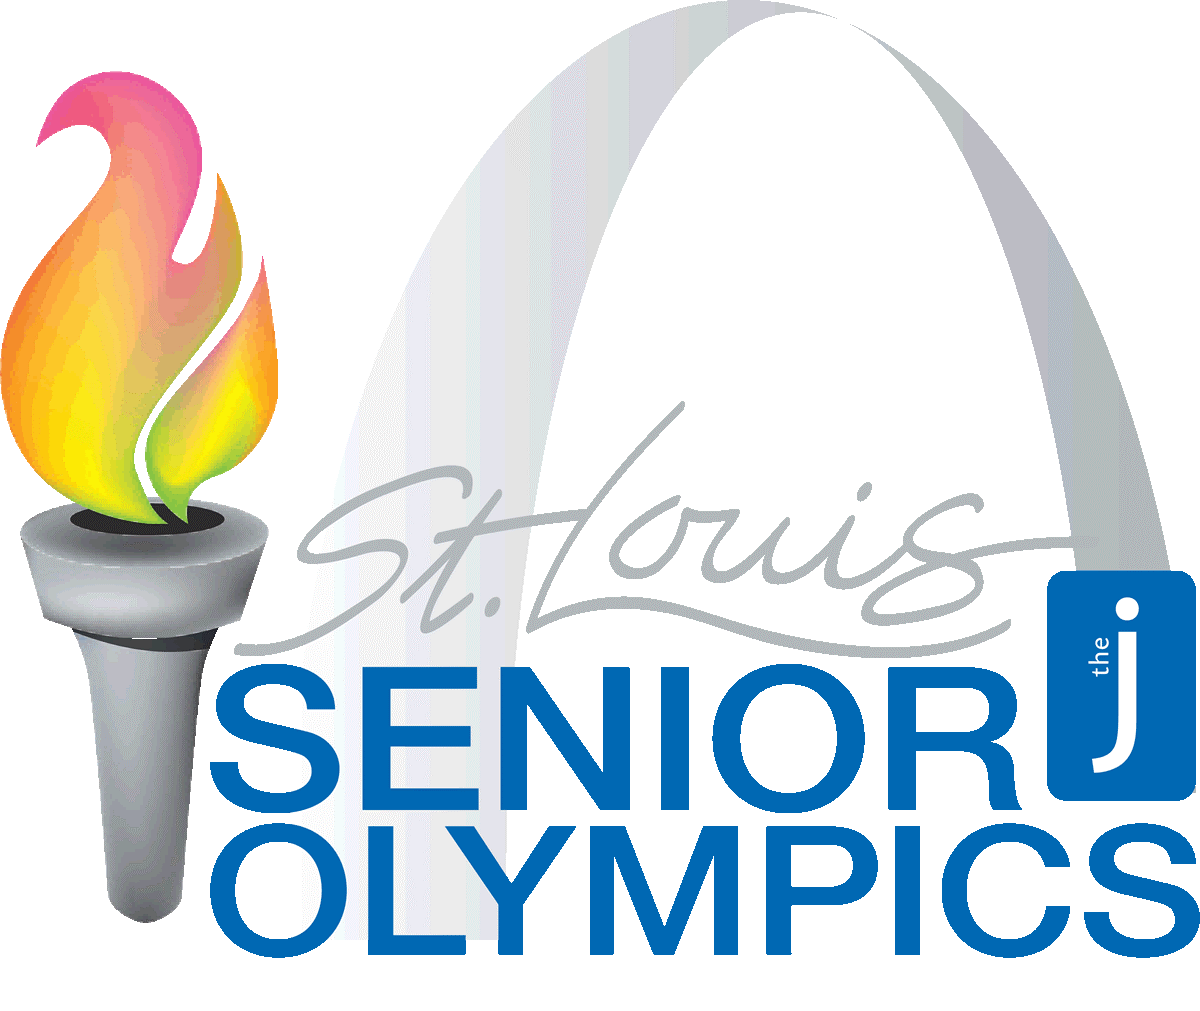 Olympics clipart senior olympics, Olympics senior olympics Transparent